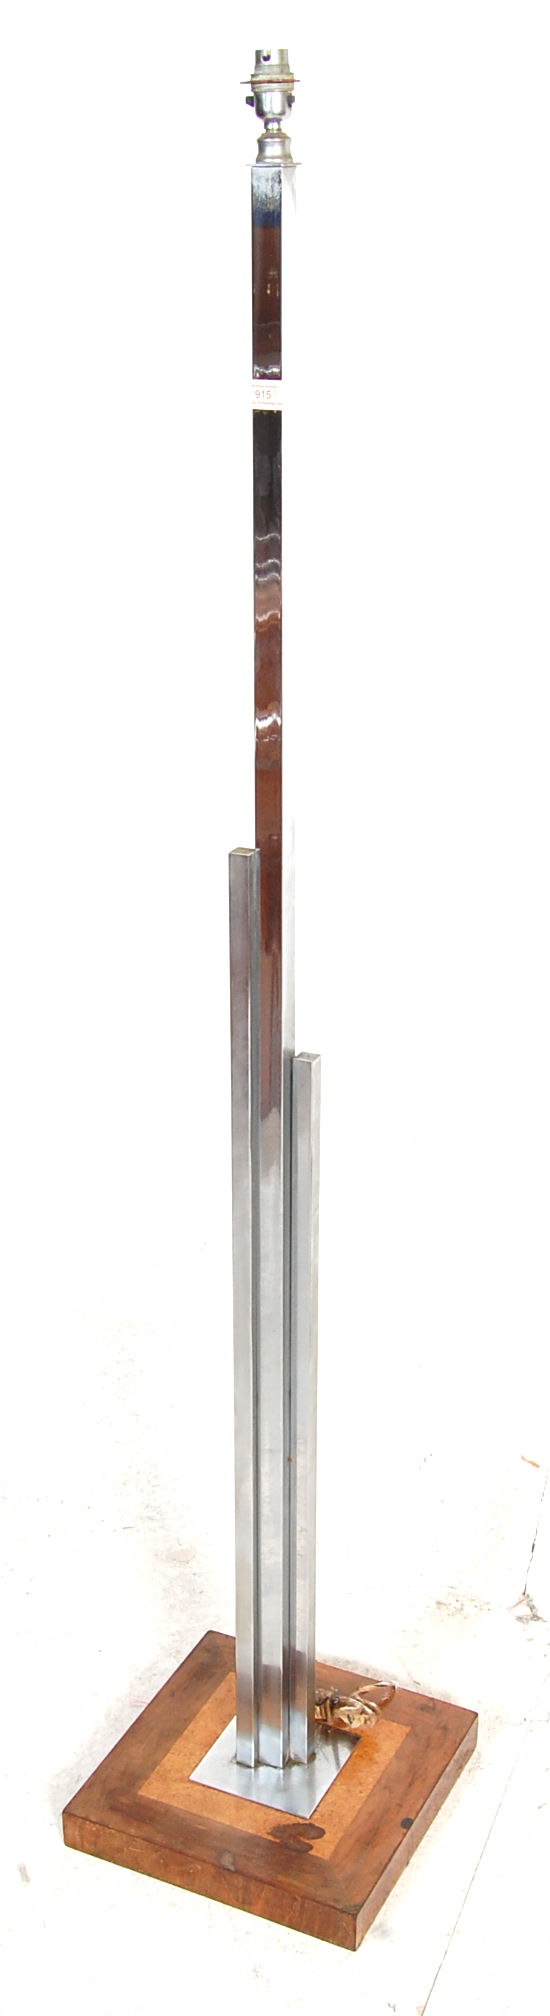 20TH CENTURY ART DECO STYLE FLOOR STANDARD LAMP / LIGHT WITH CHROM TUBULAR COLUMN - Image 3 of 3